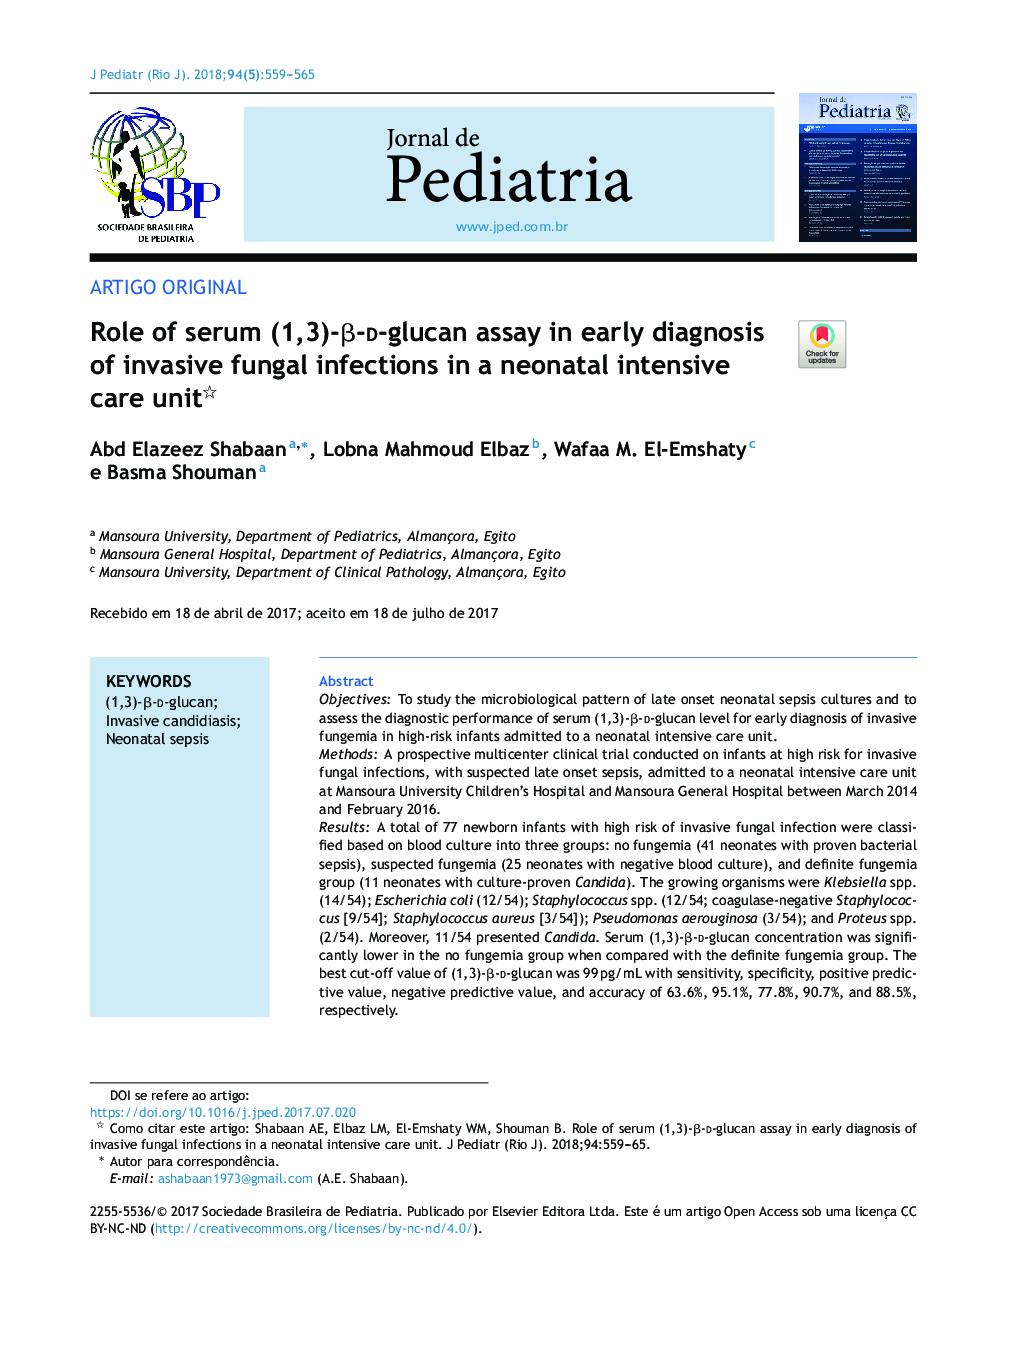 Role of serum (1,3)âÎ²âdâglucan assay in early diagnosis of invasive fungal infections in a neonatal intensive care unit